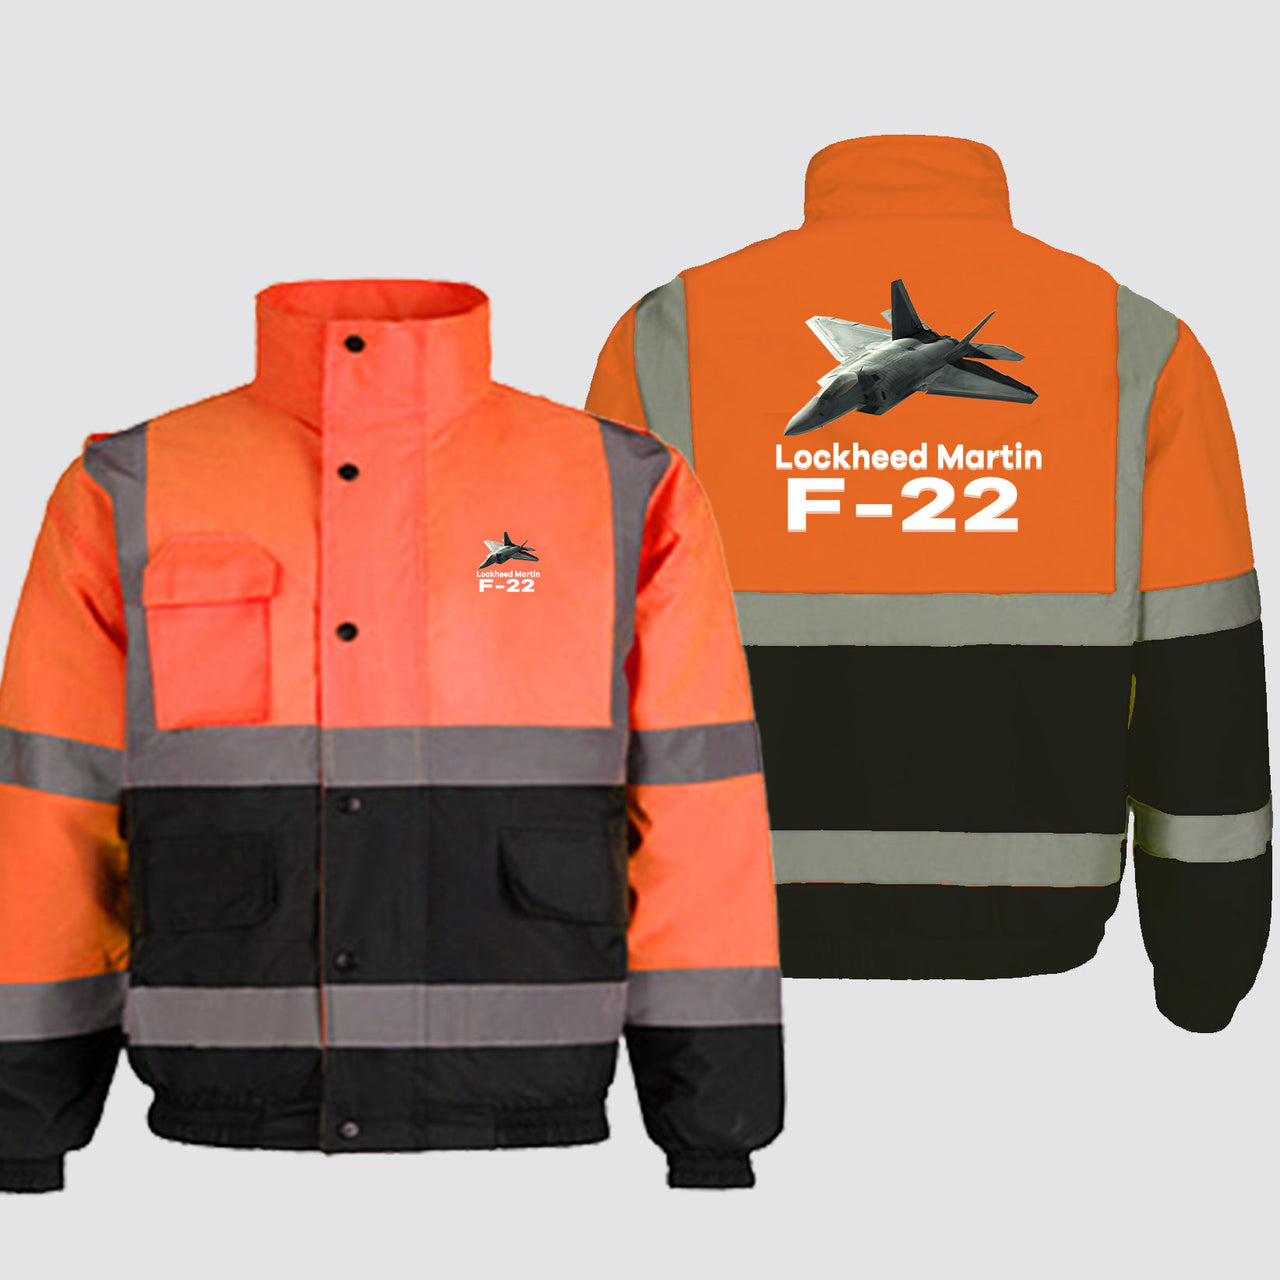 The Lockheed Martin F22 Designed Reflective Winter Jackets